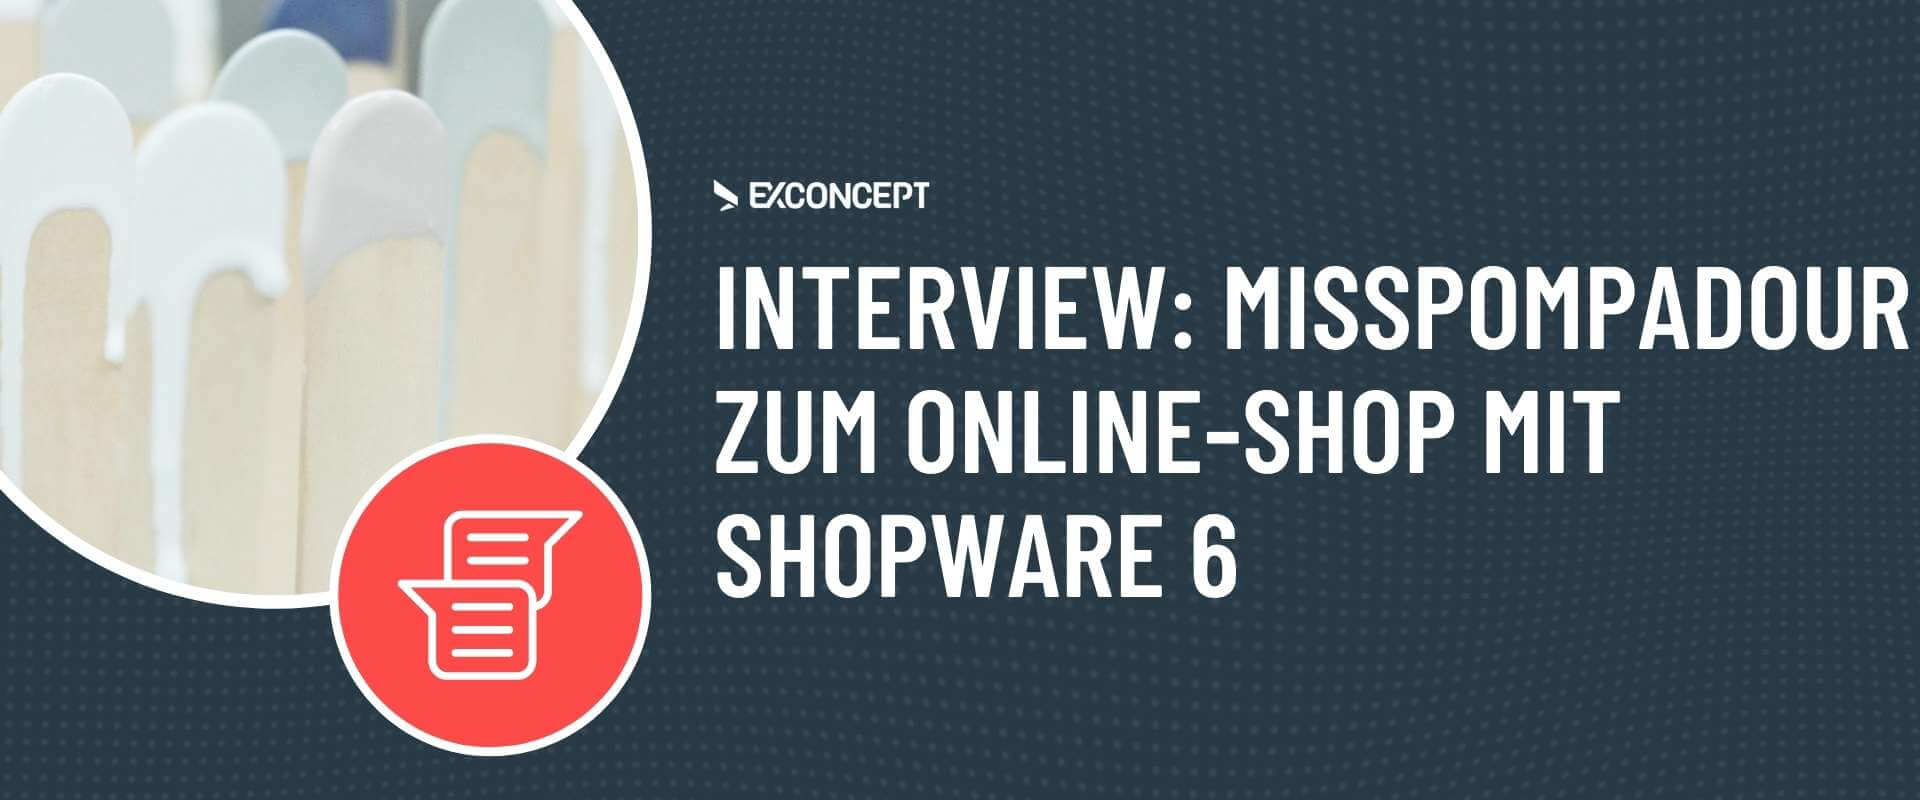 Shop-Relaunch MissPompadour - Vorschau zum Interview